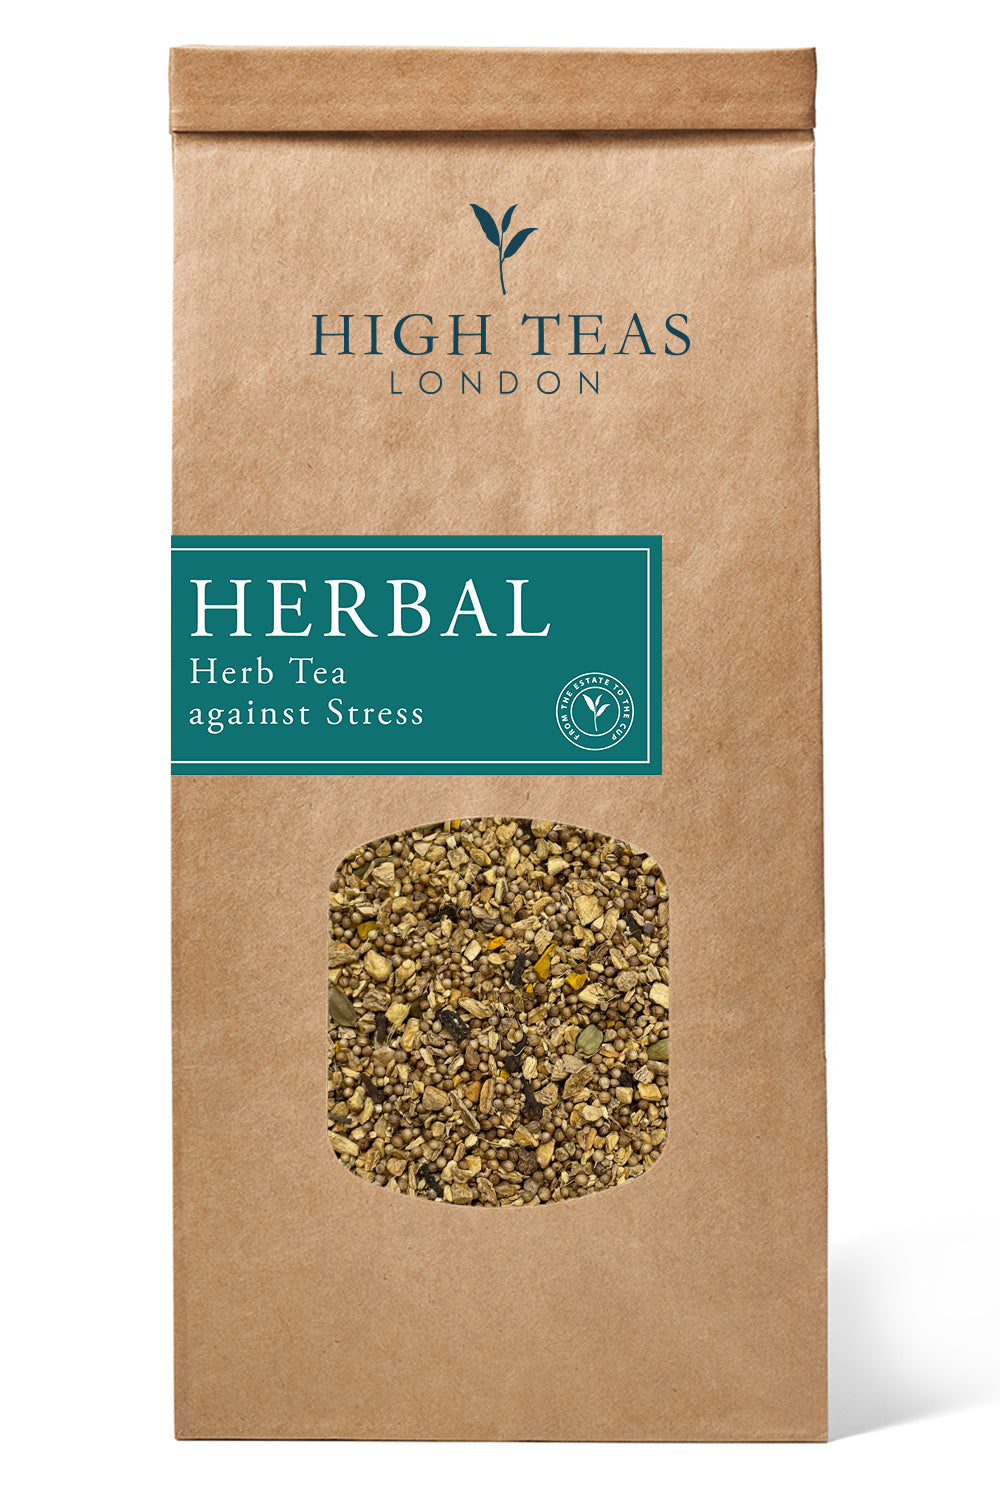 Herb Tea against Stress - Vata supports the Dosha "VATA"-250g-Loose Leaf Tea-High Teas